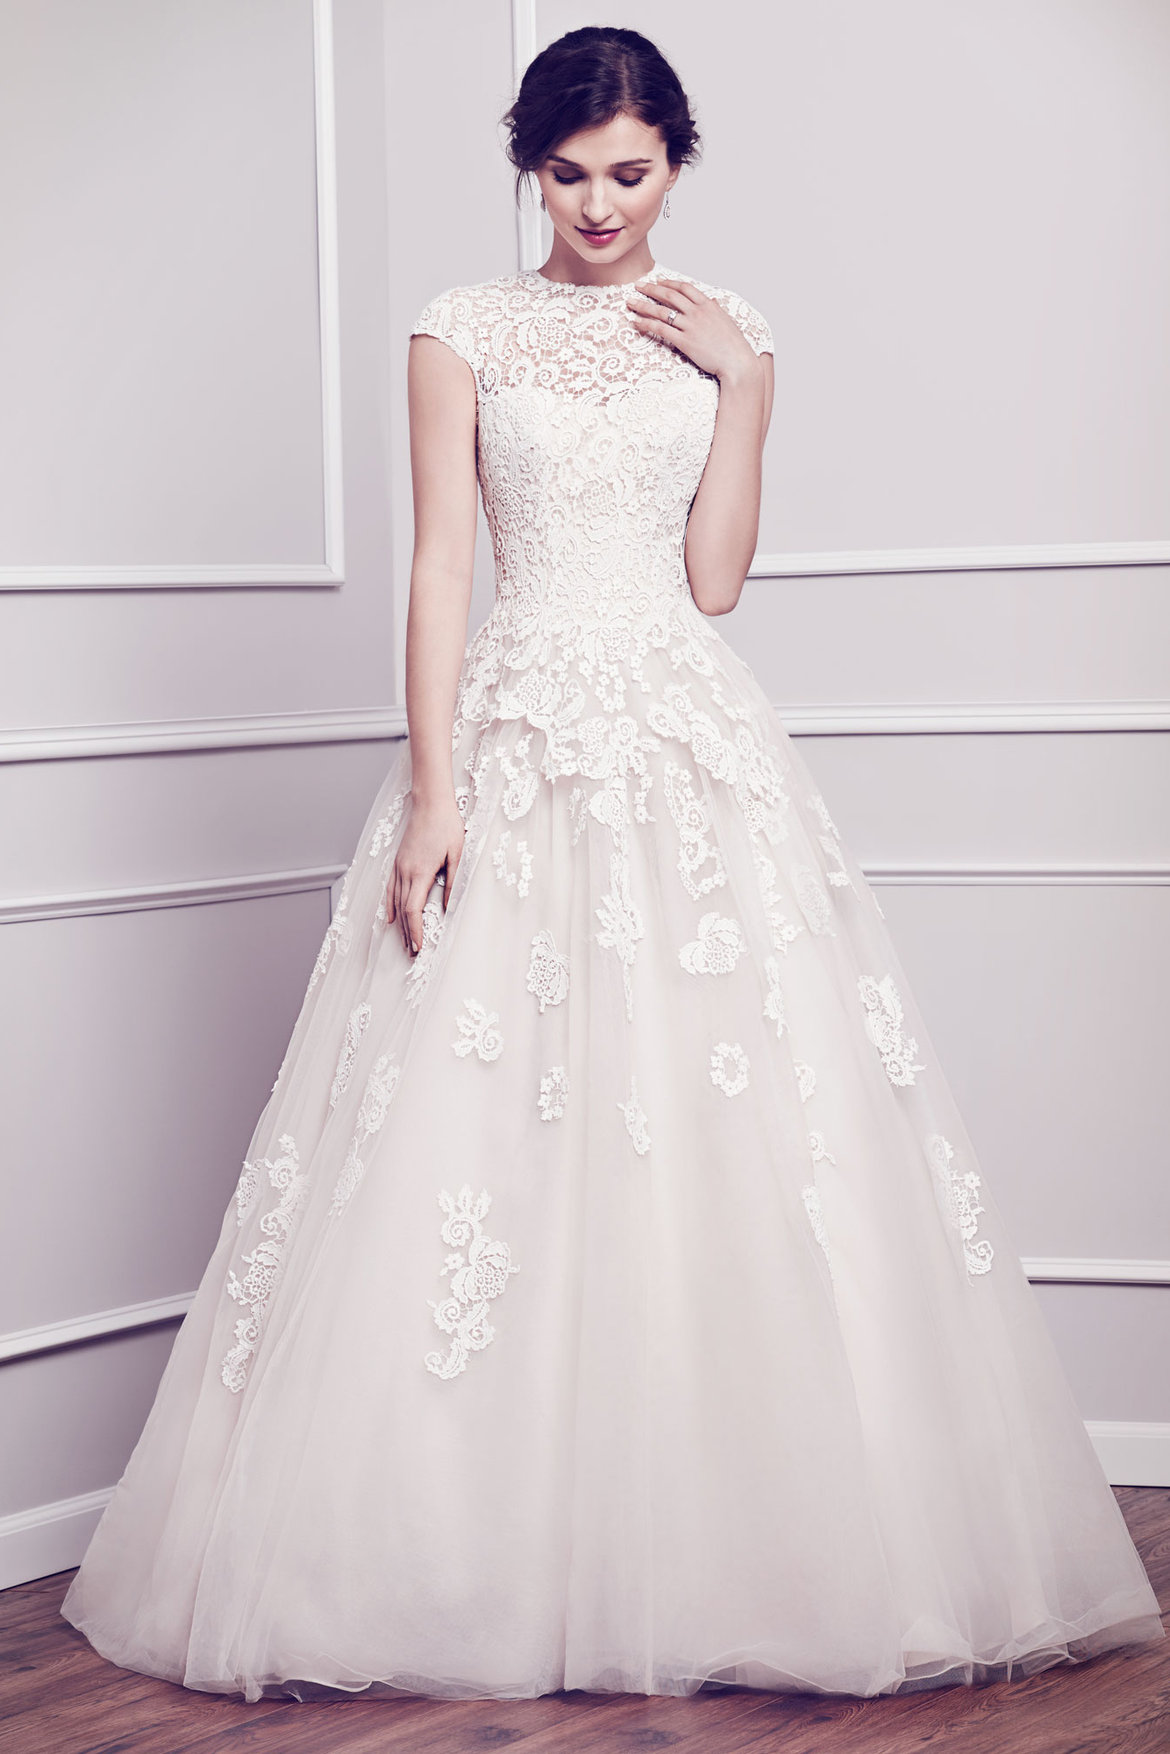 Say Yes to the Dress Wedding Dress Gallery | Inside TLC | TLC.com